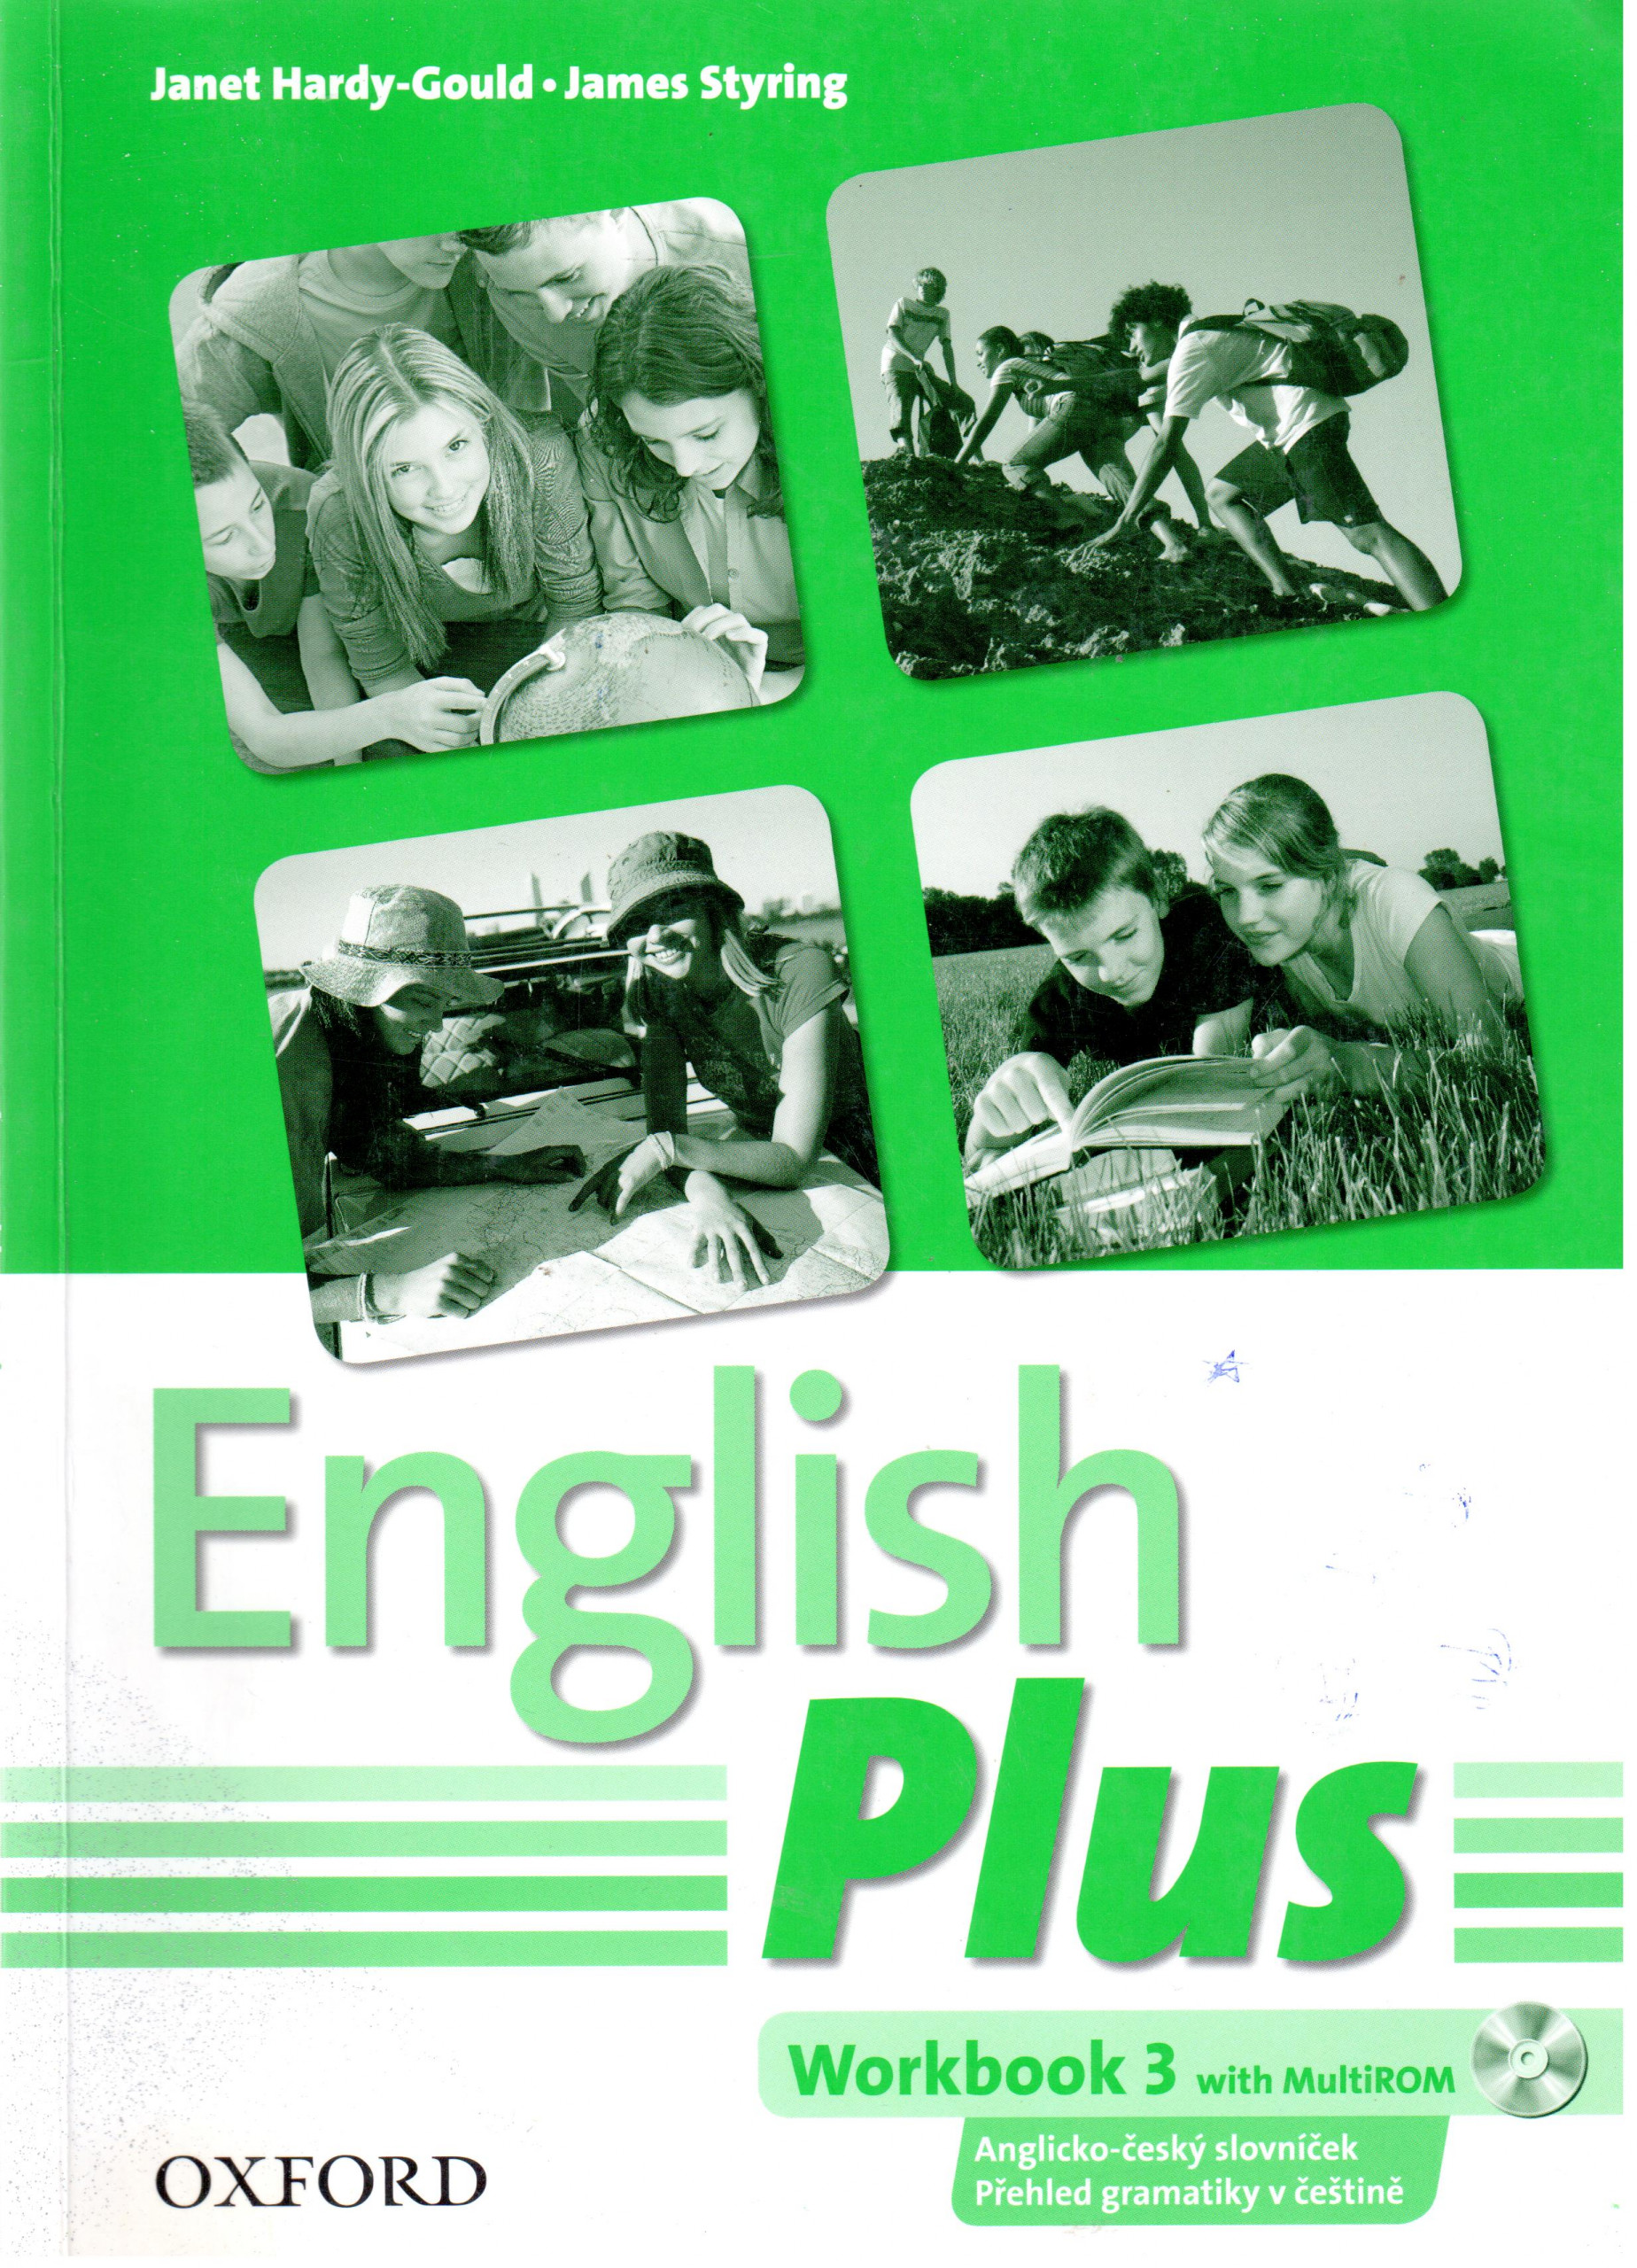 English Plus 3 Workbook with MultiROM (Czech Edition) - Náhled učebnice